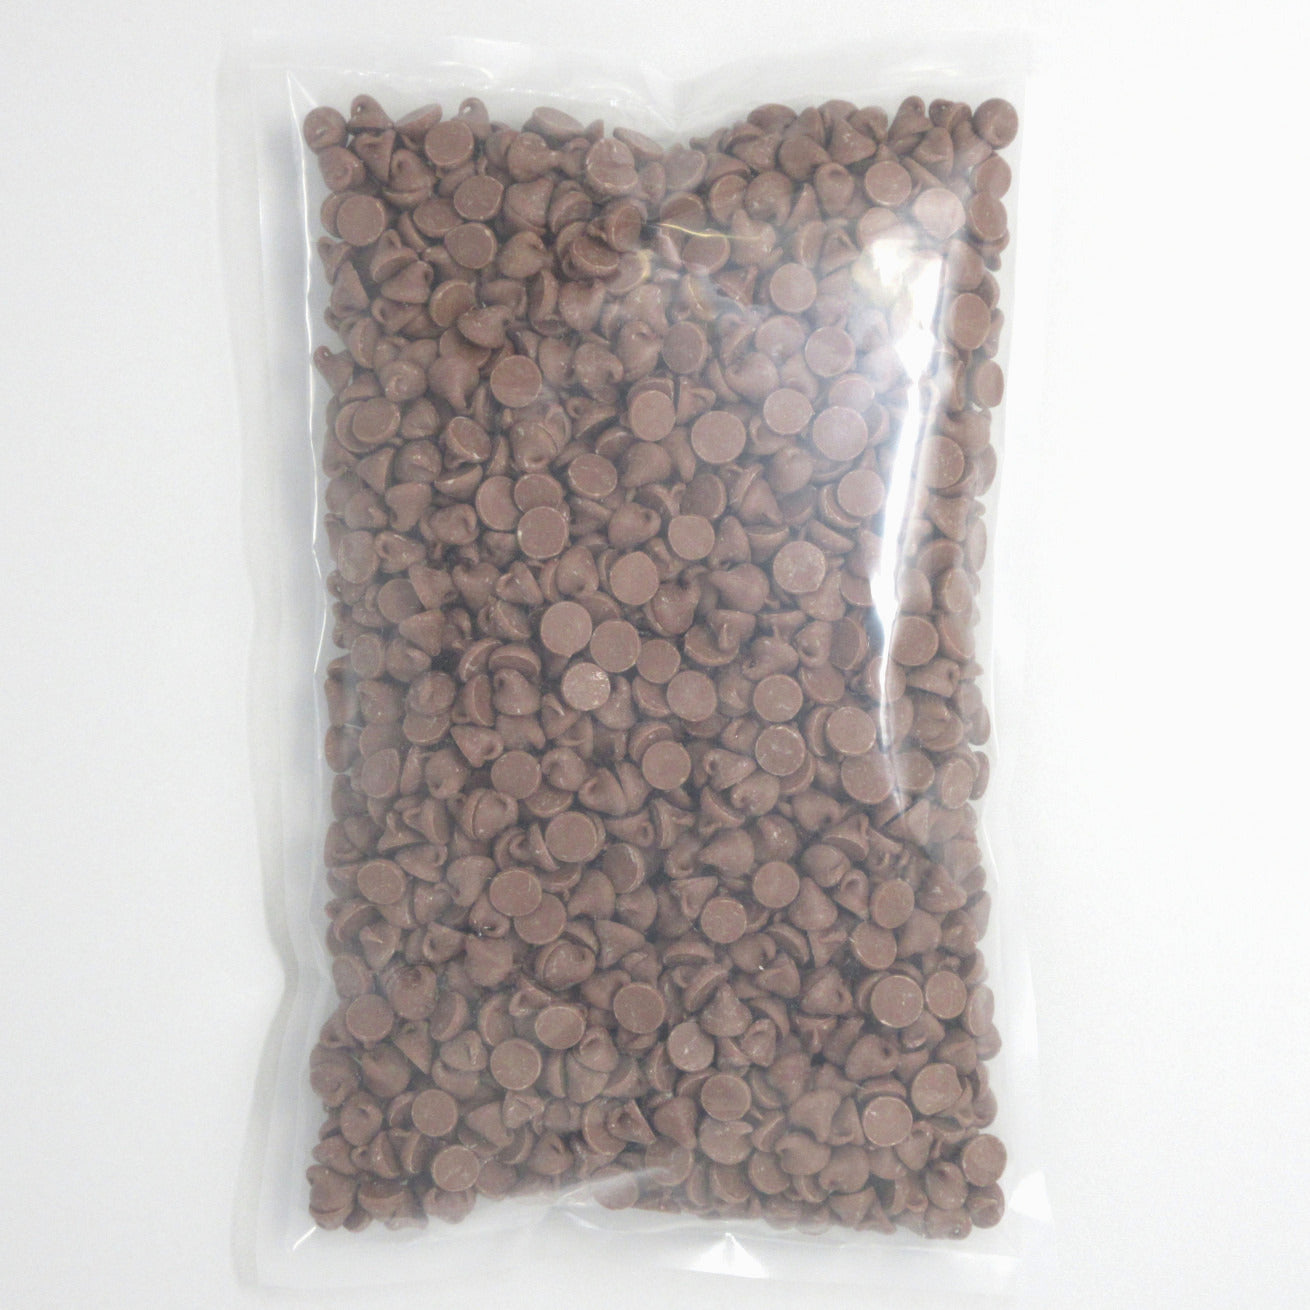 Flour Barrel product image - Milk Chocolate Chips